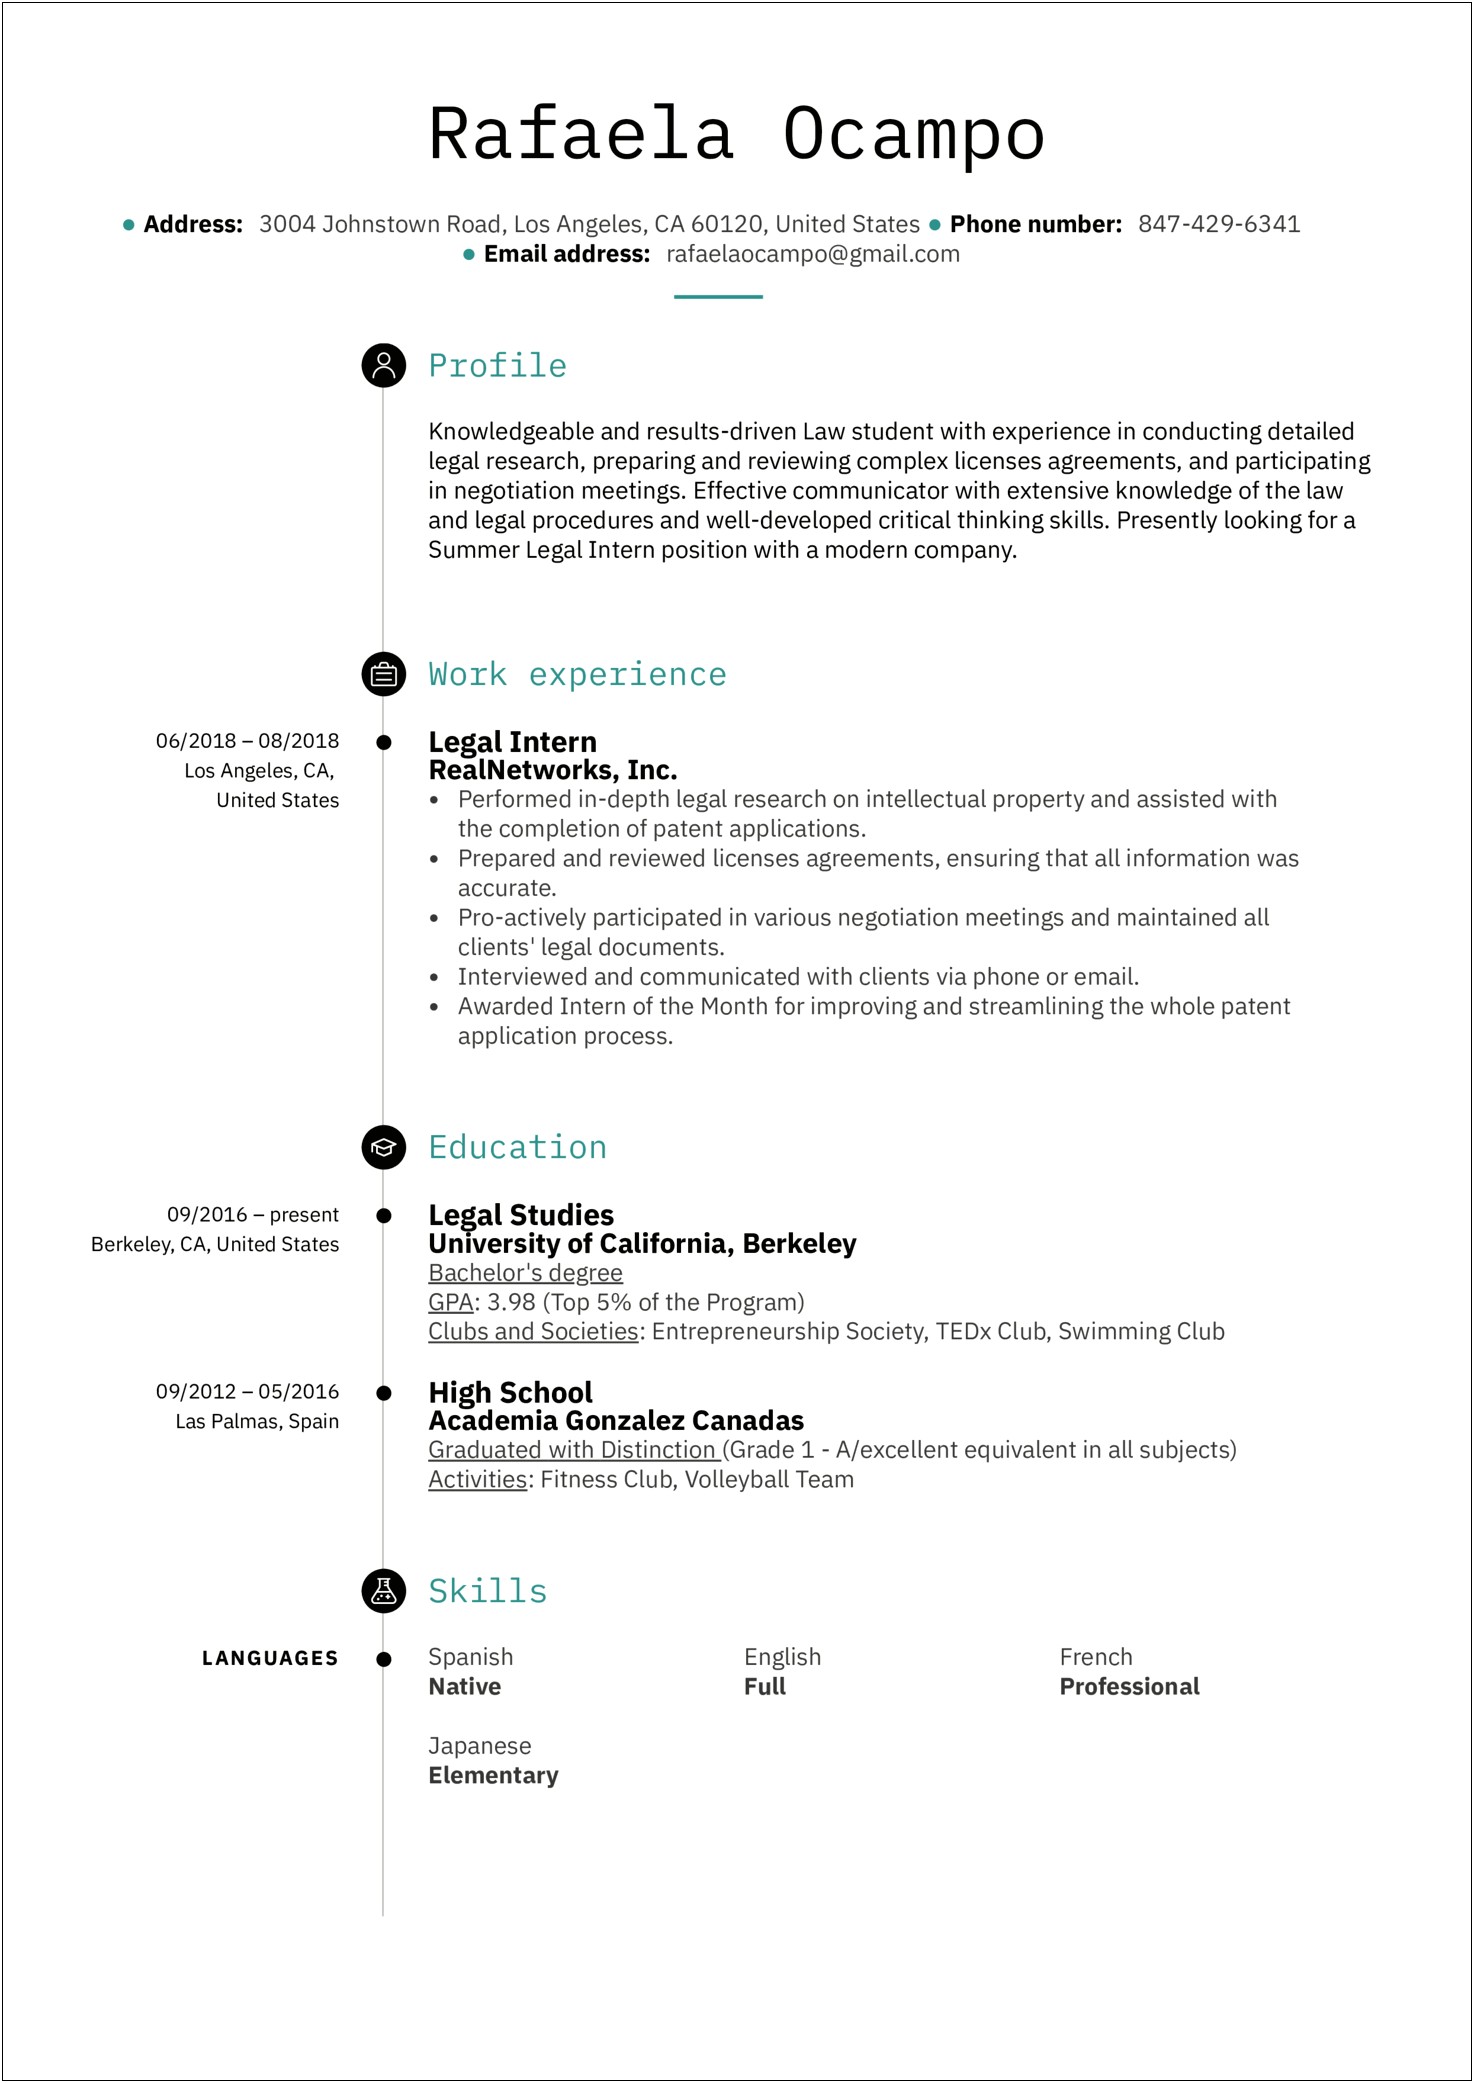 Law Firm Summer Associate Description Resume